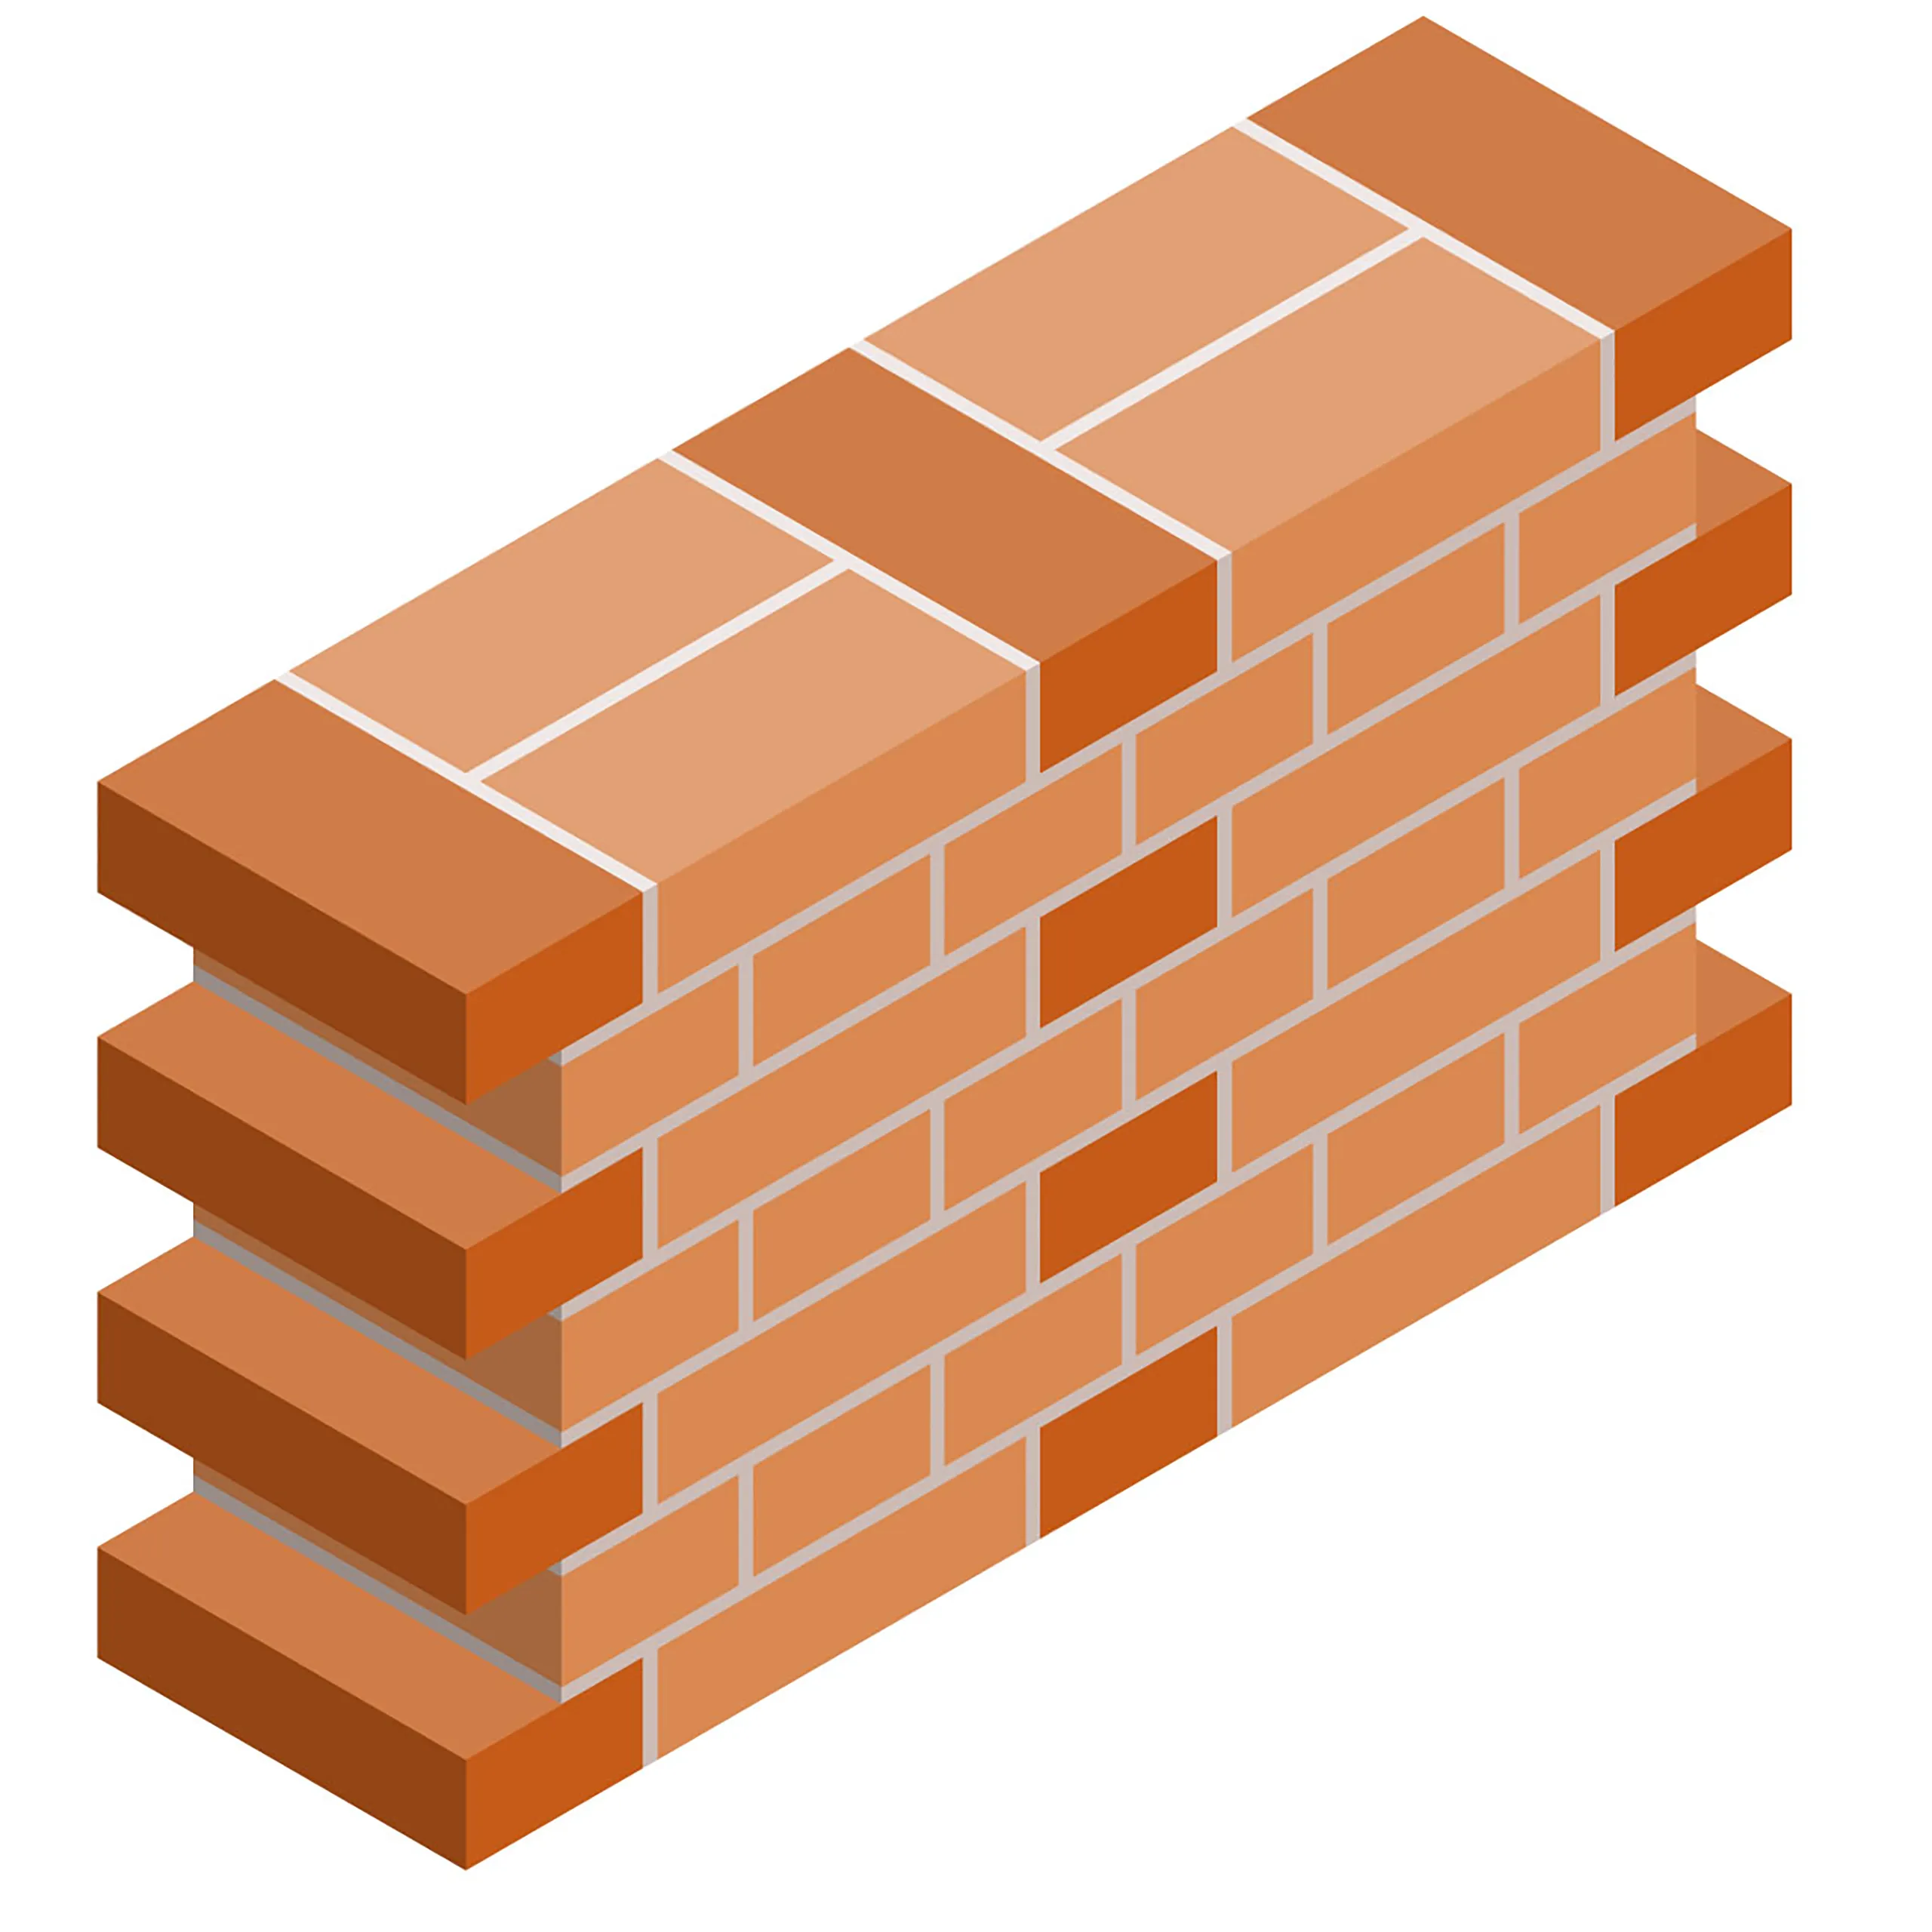 Flemish bond brickwork